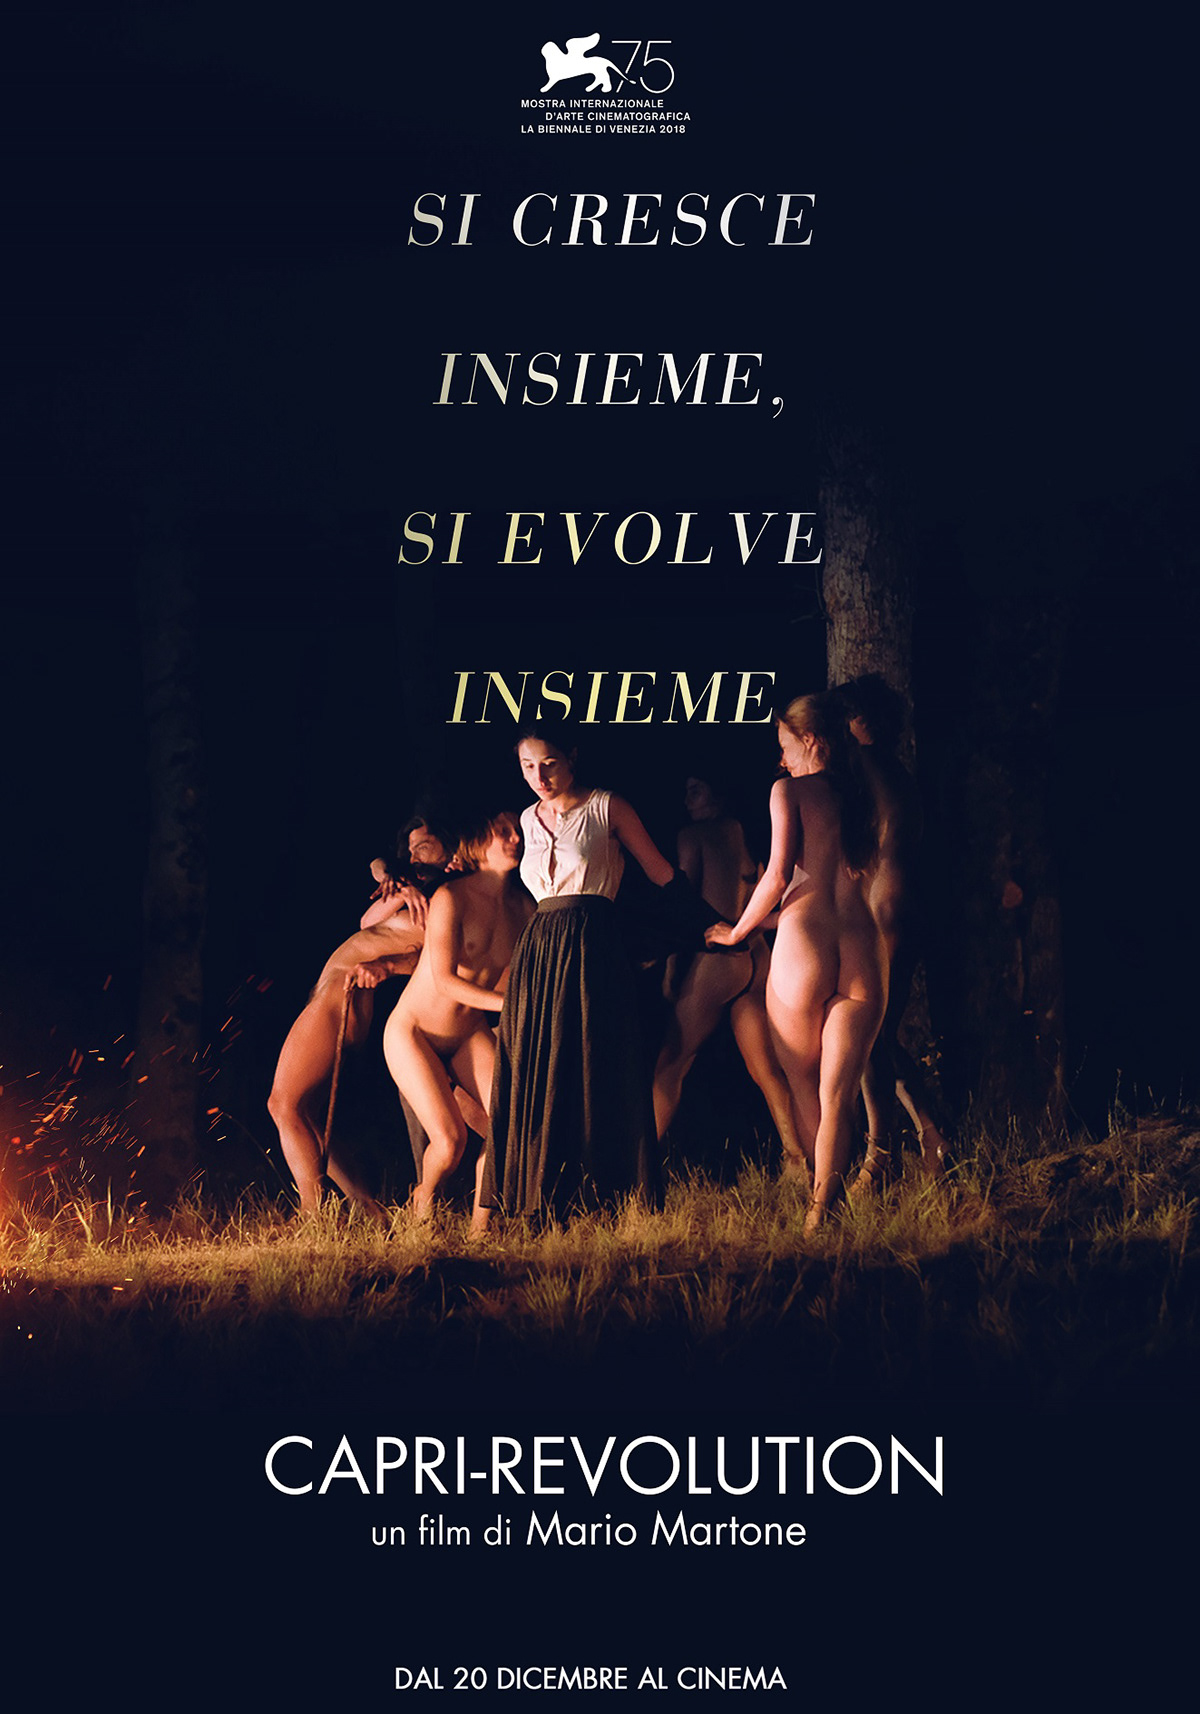 Capri revolution Mario Martone 01distribution Cinema Marketing cinematografico trailer poster Film   keyart manifesto